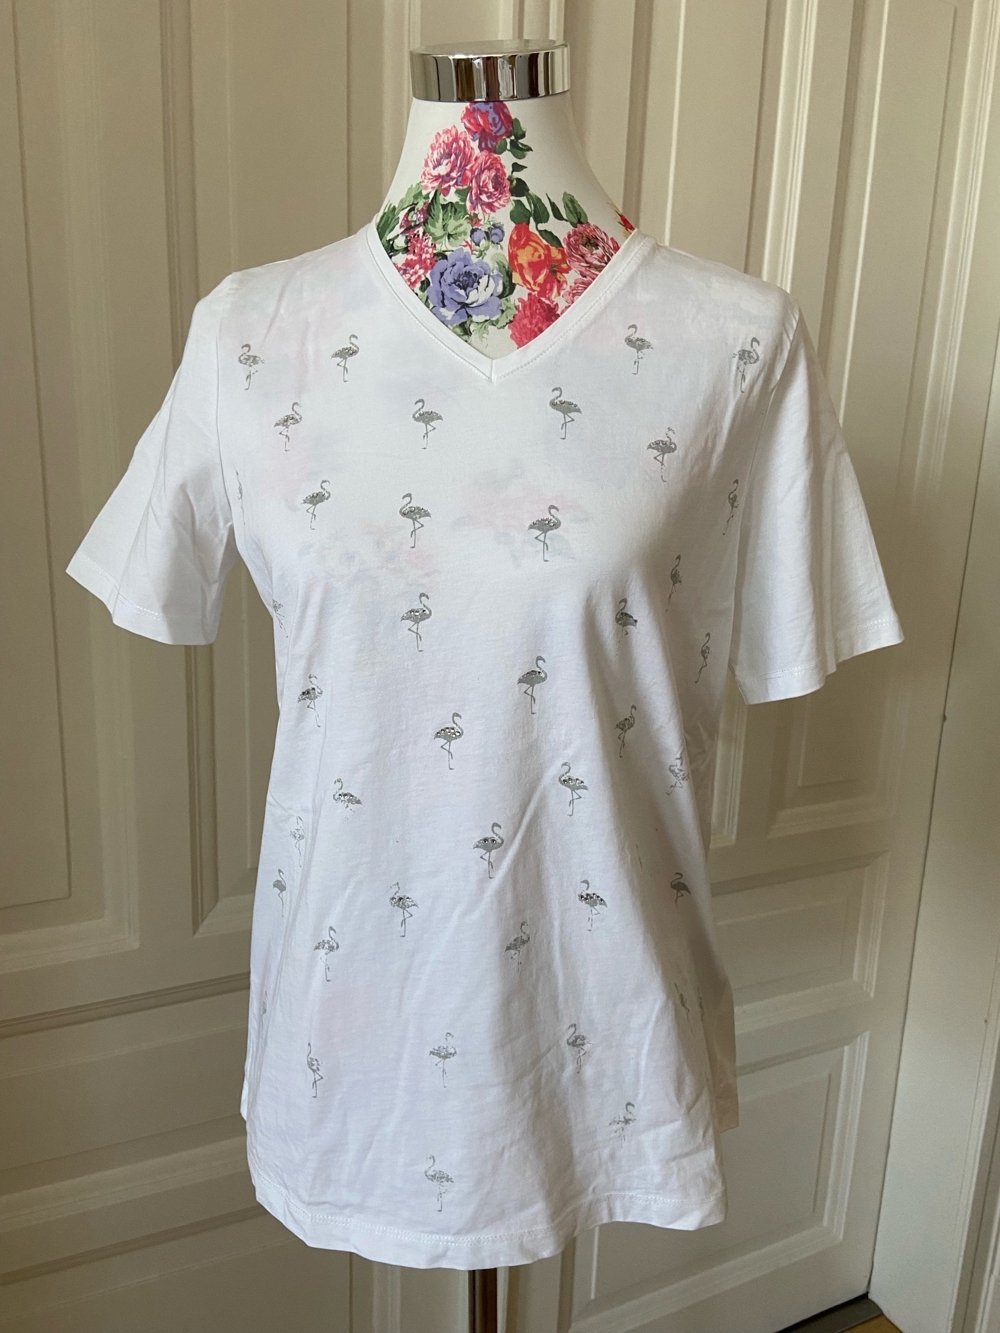 Flamingo-Shirt von Betty Barclay, 40